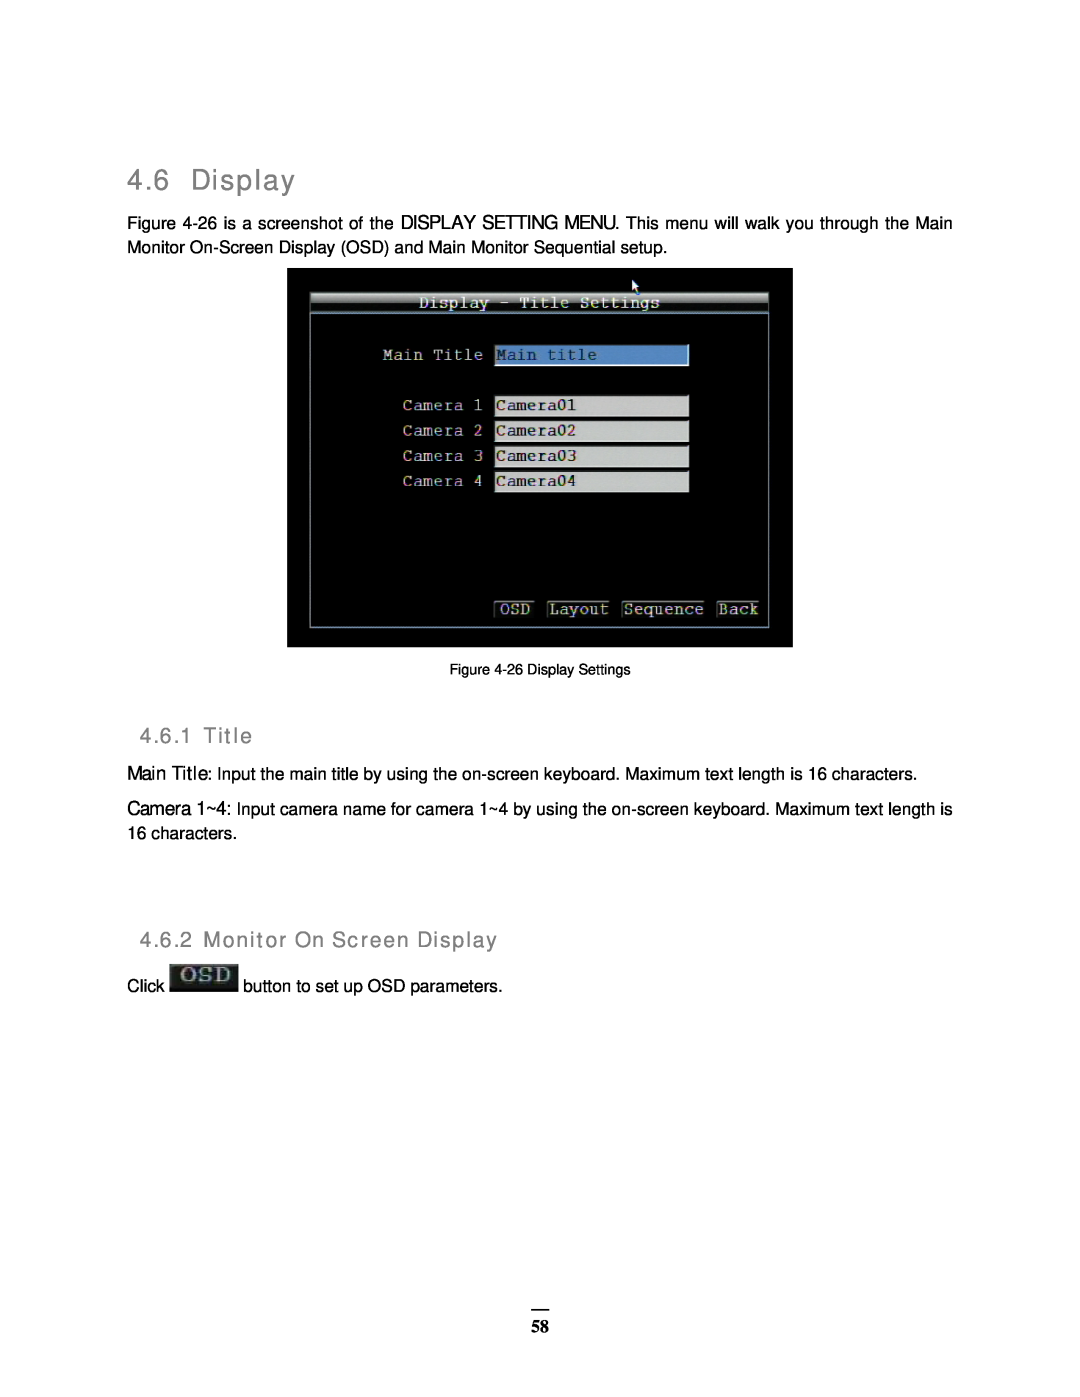 EverFocus EMV400 user manual Title, Monitor On Screen Display 